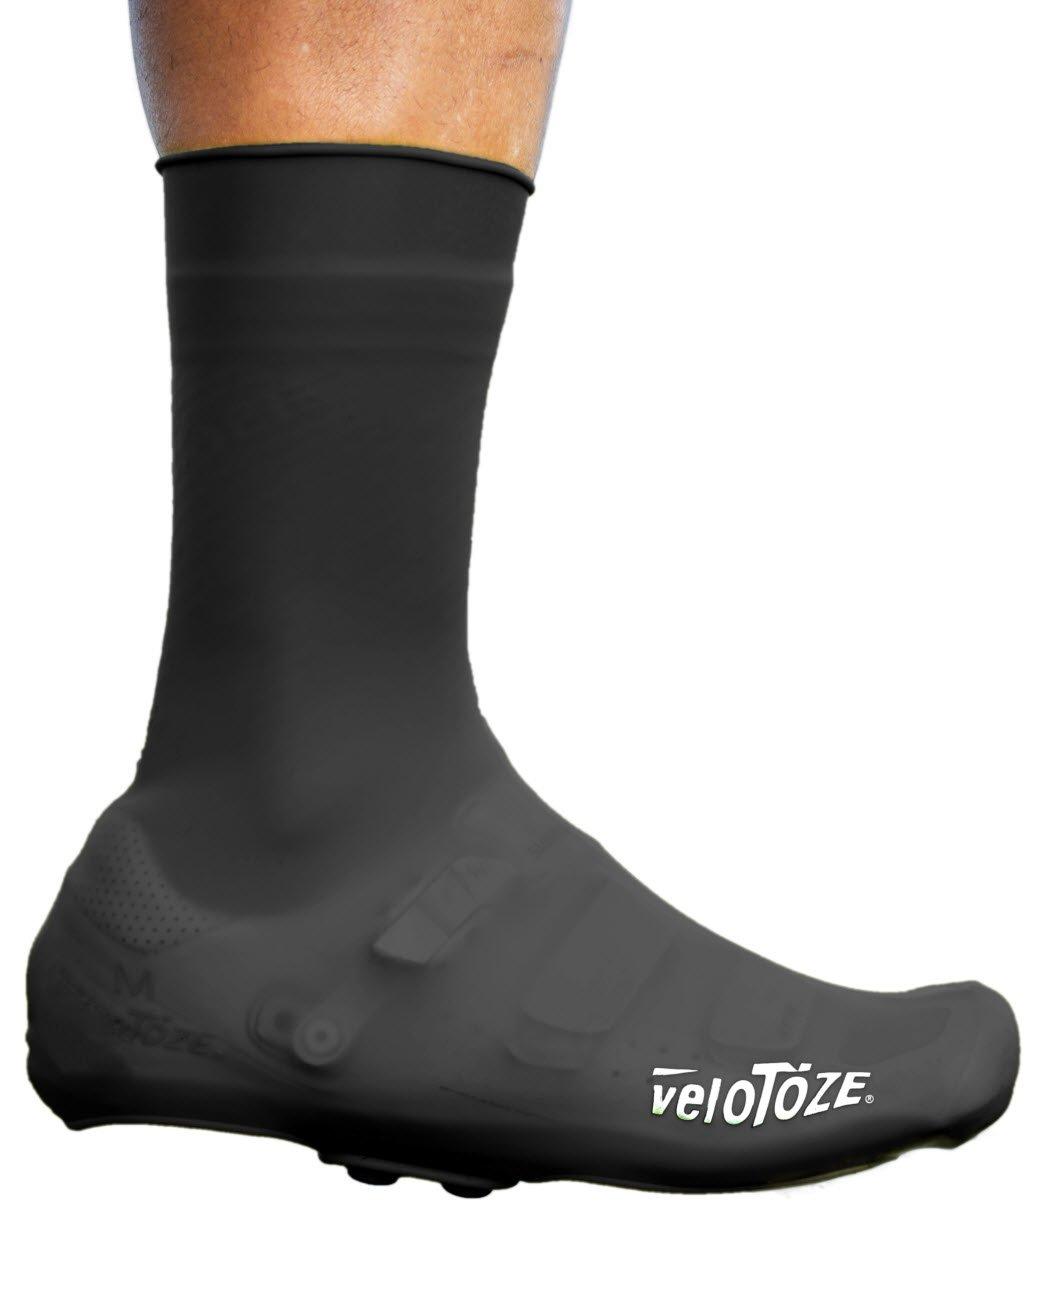 Velotoze Silicone Shoe Cover (tall) - Black